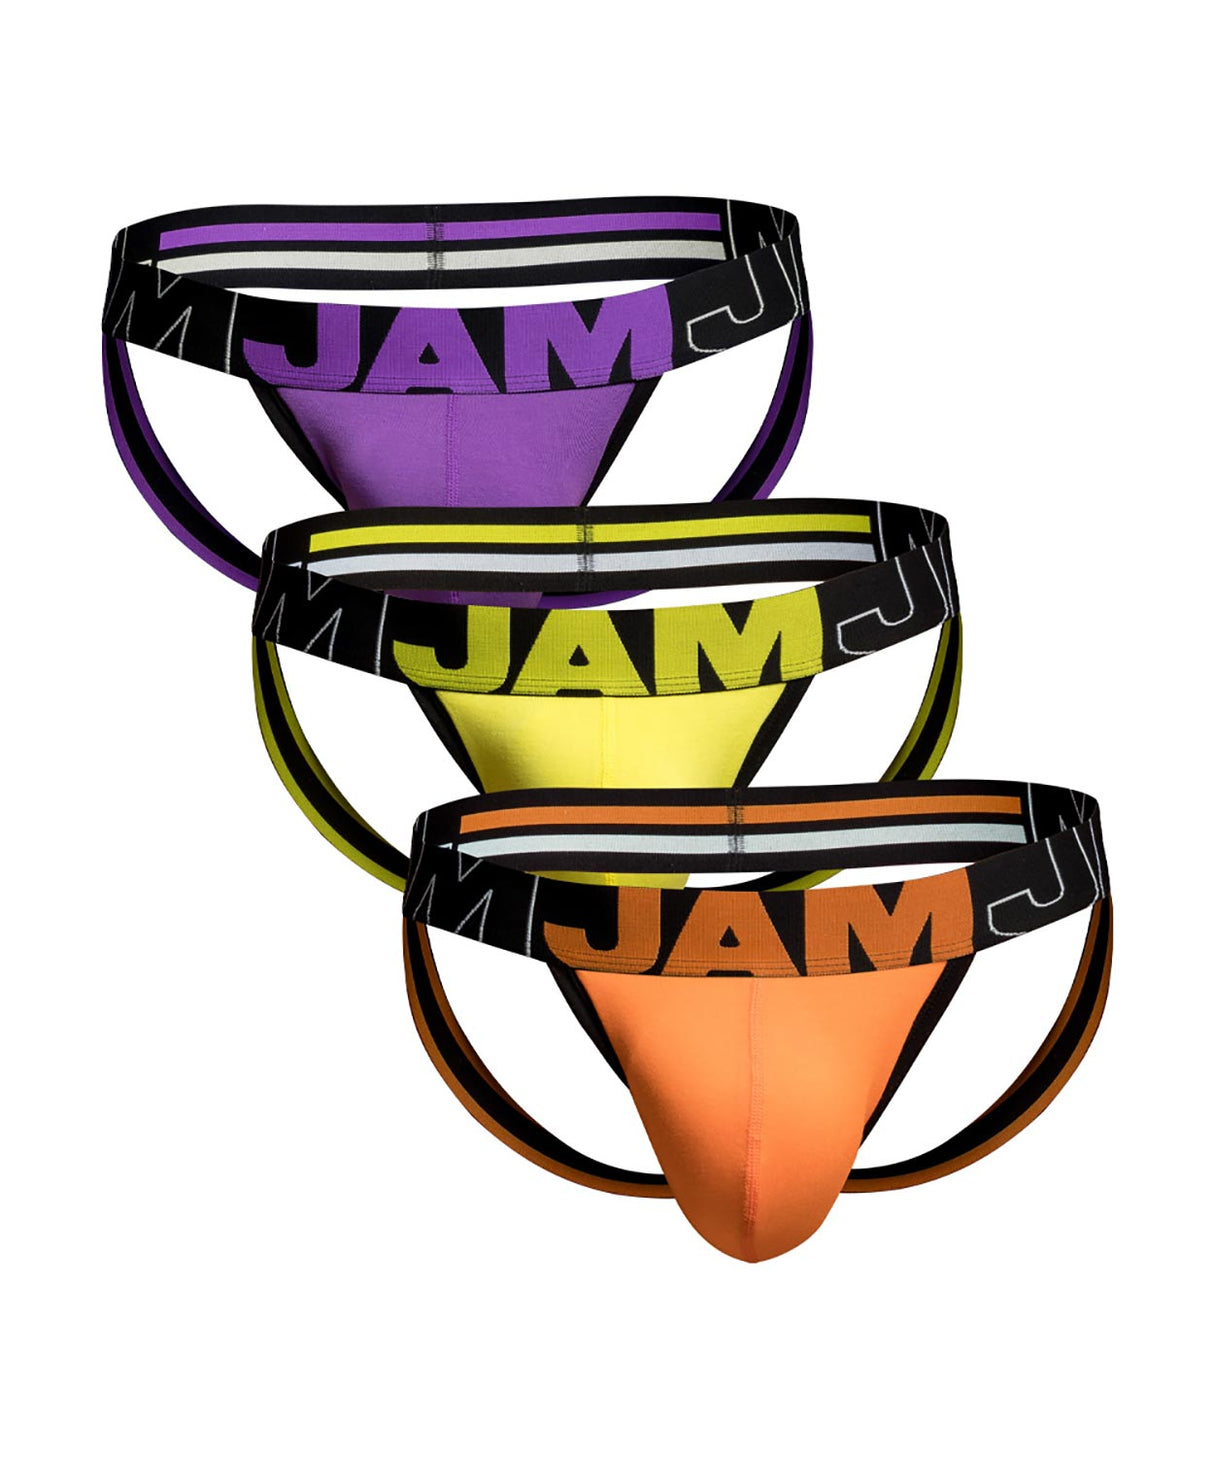 JAM - Jockstrap - 3 Pack